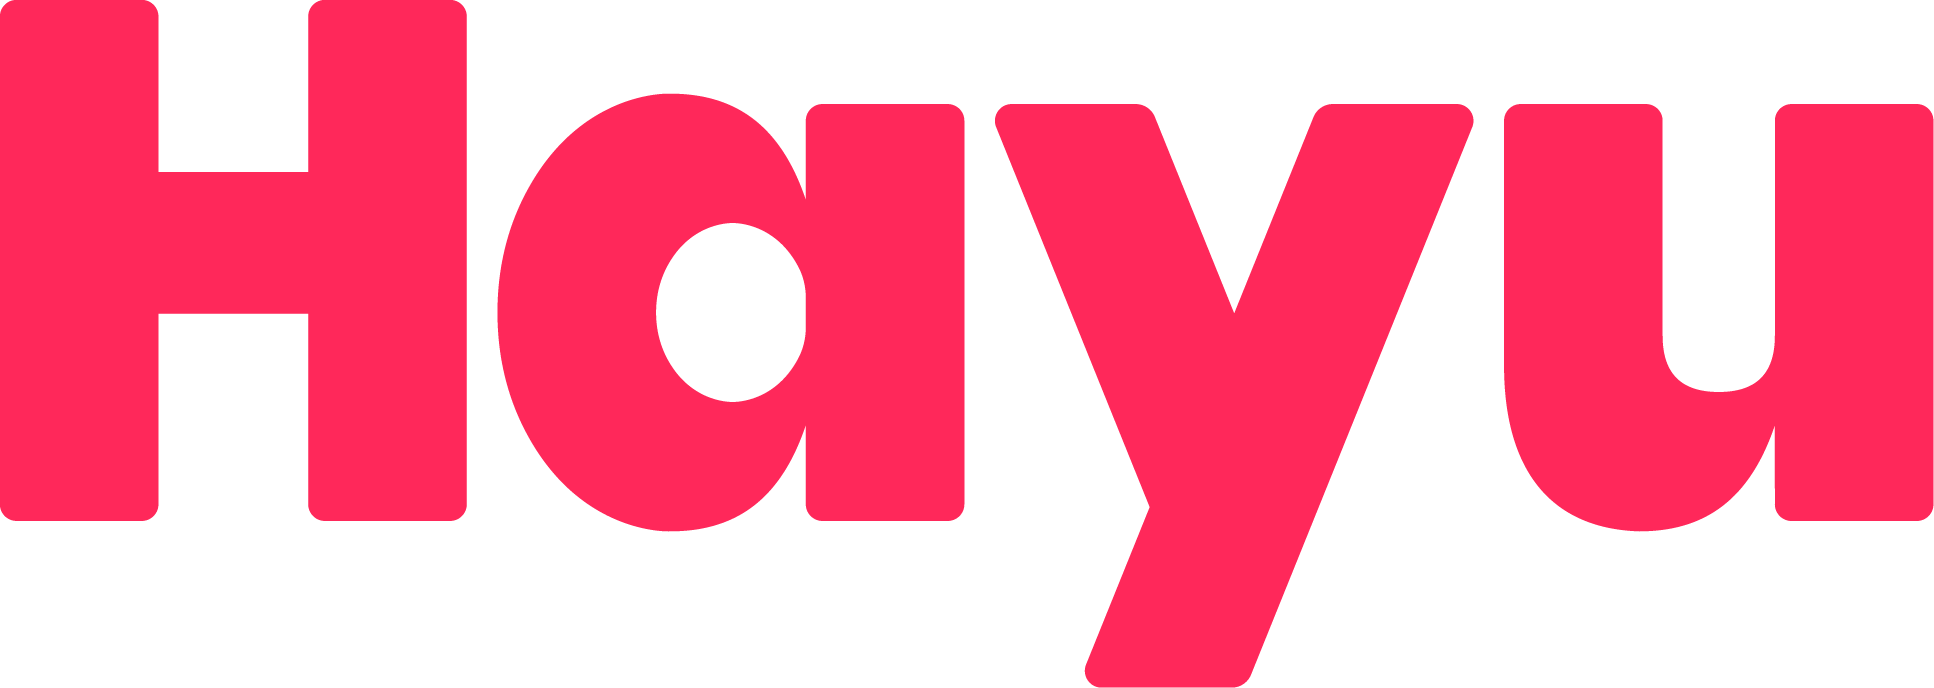 Hayu Logo